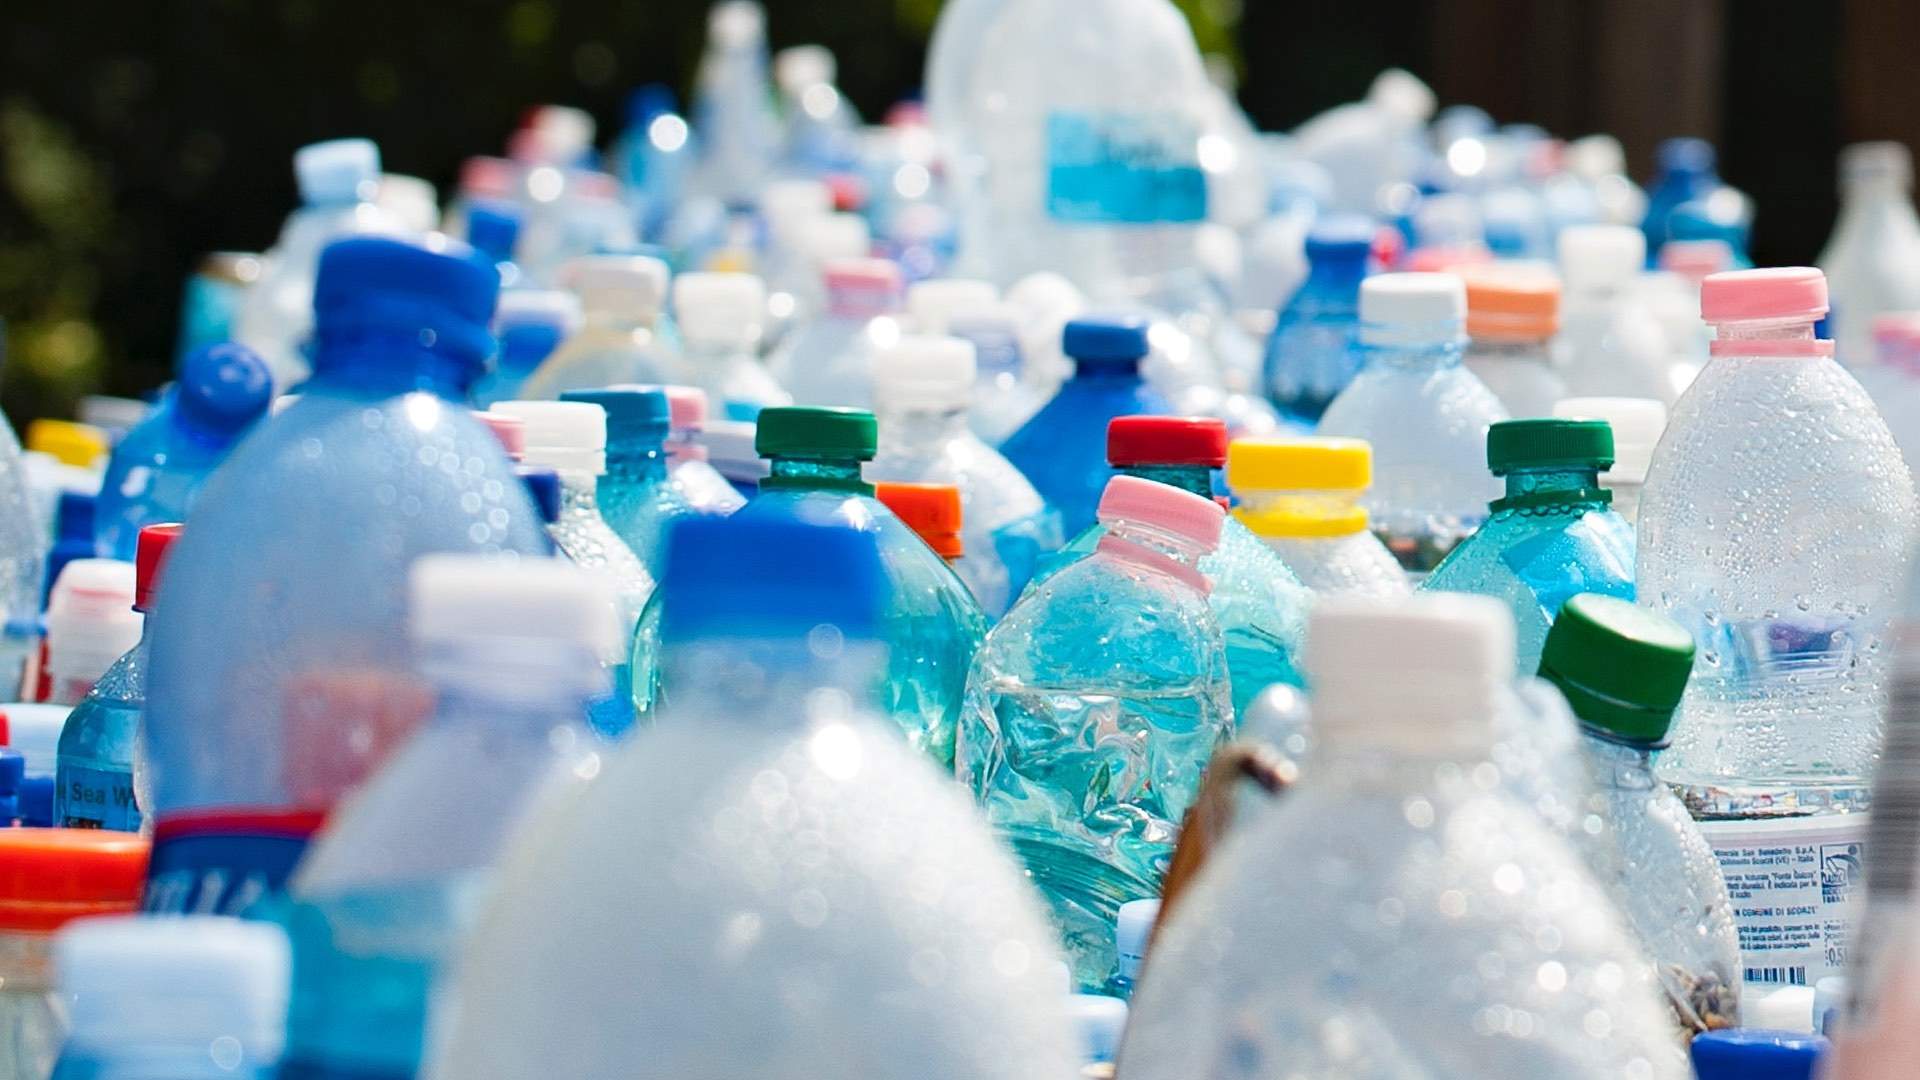 The UK Parliament Has Made a Landmark Decision to Go Plastic-Free